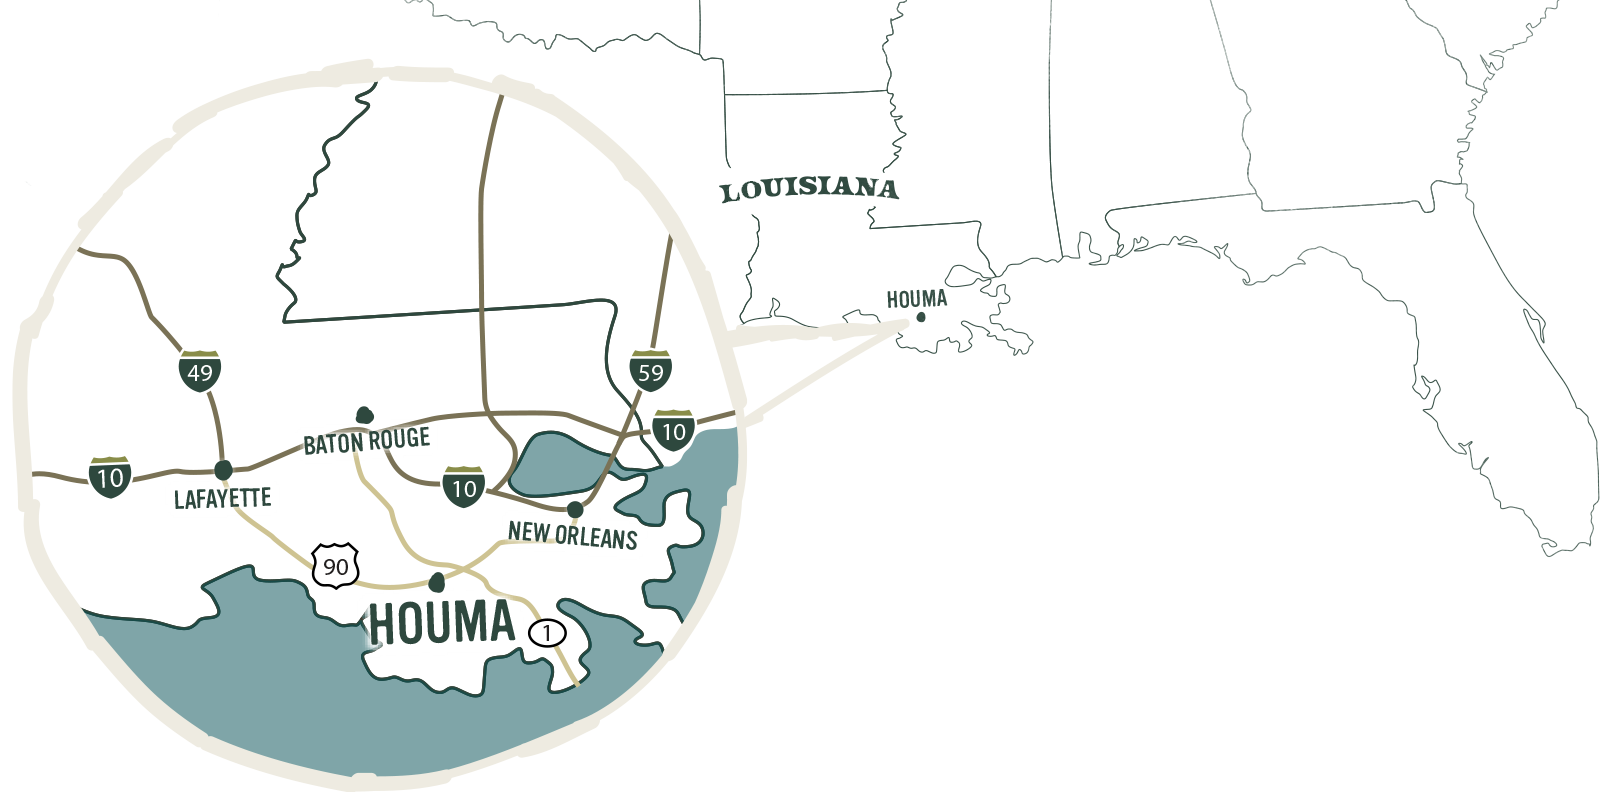 Houma location on map